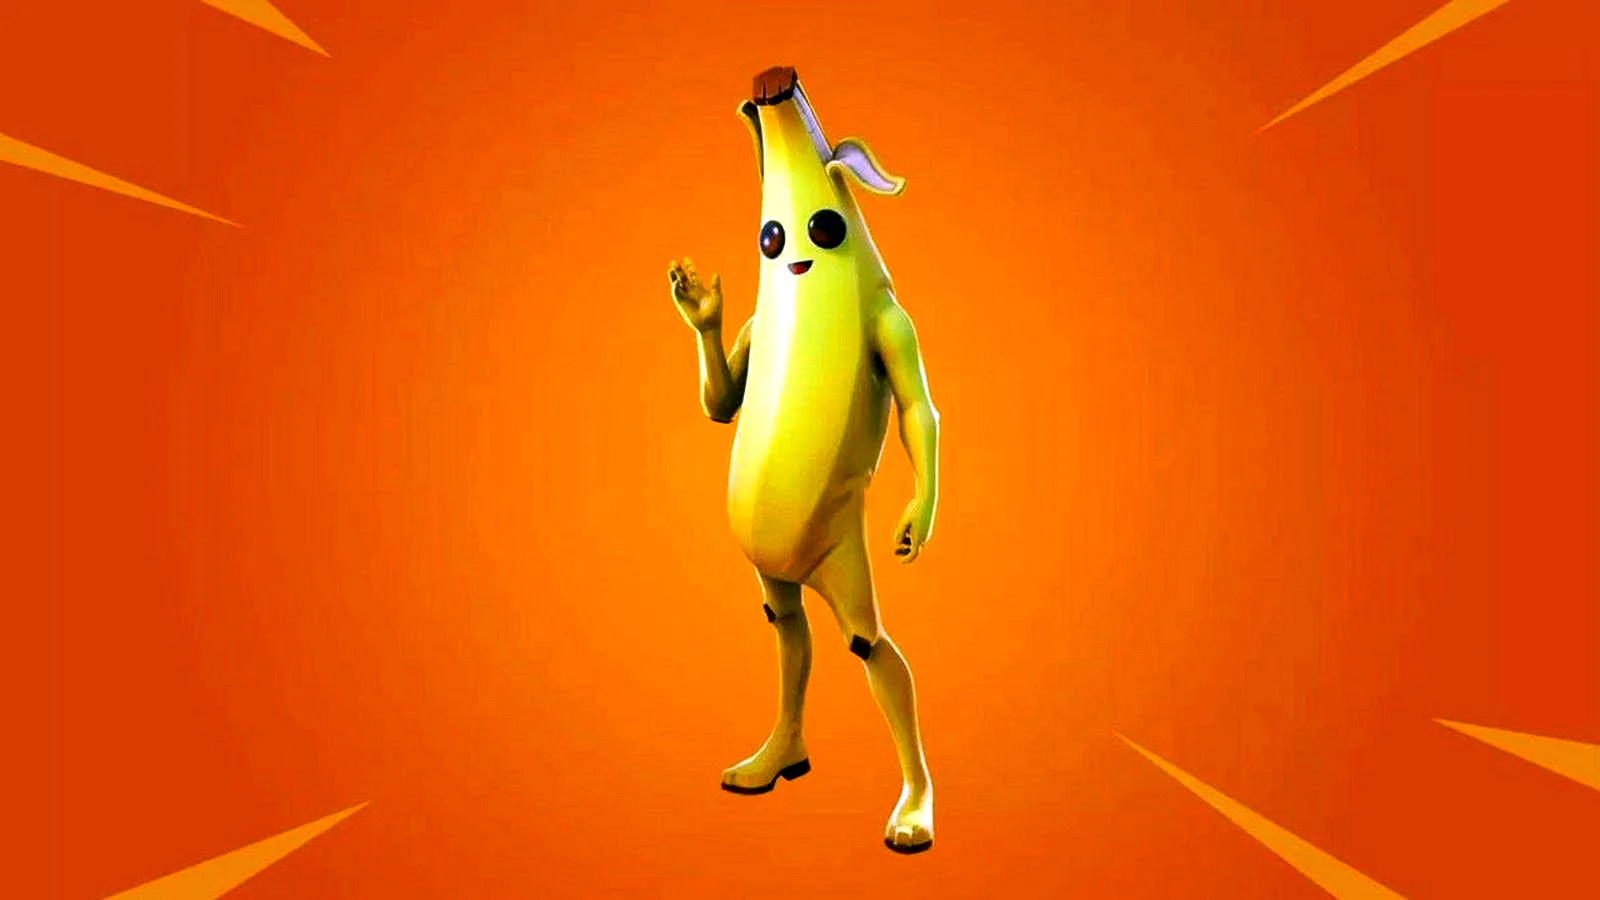 Fortnite Banana Wallpapers - Free Fortnite Banana Backgrounds ...